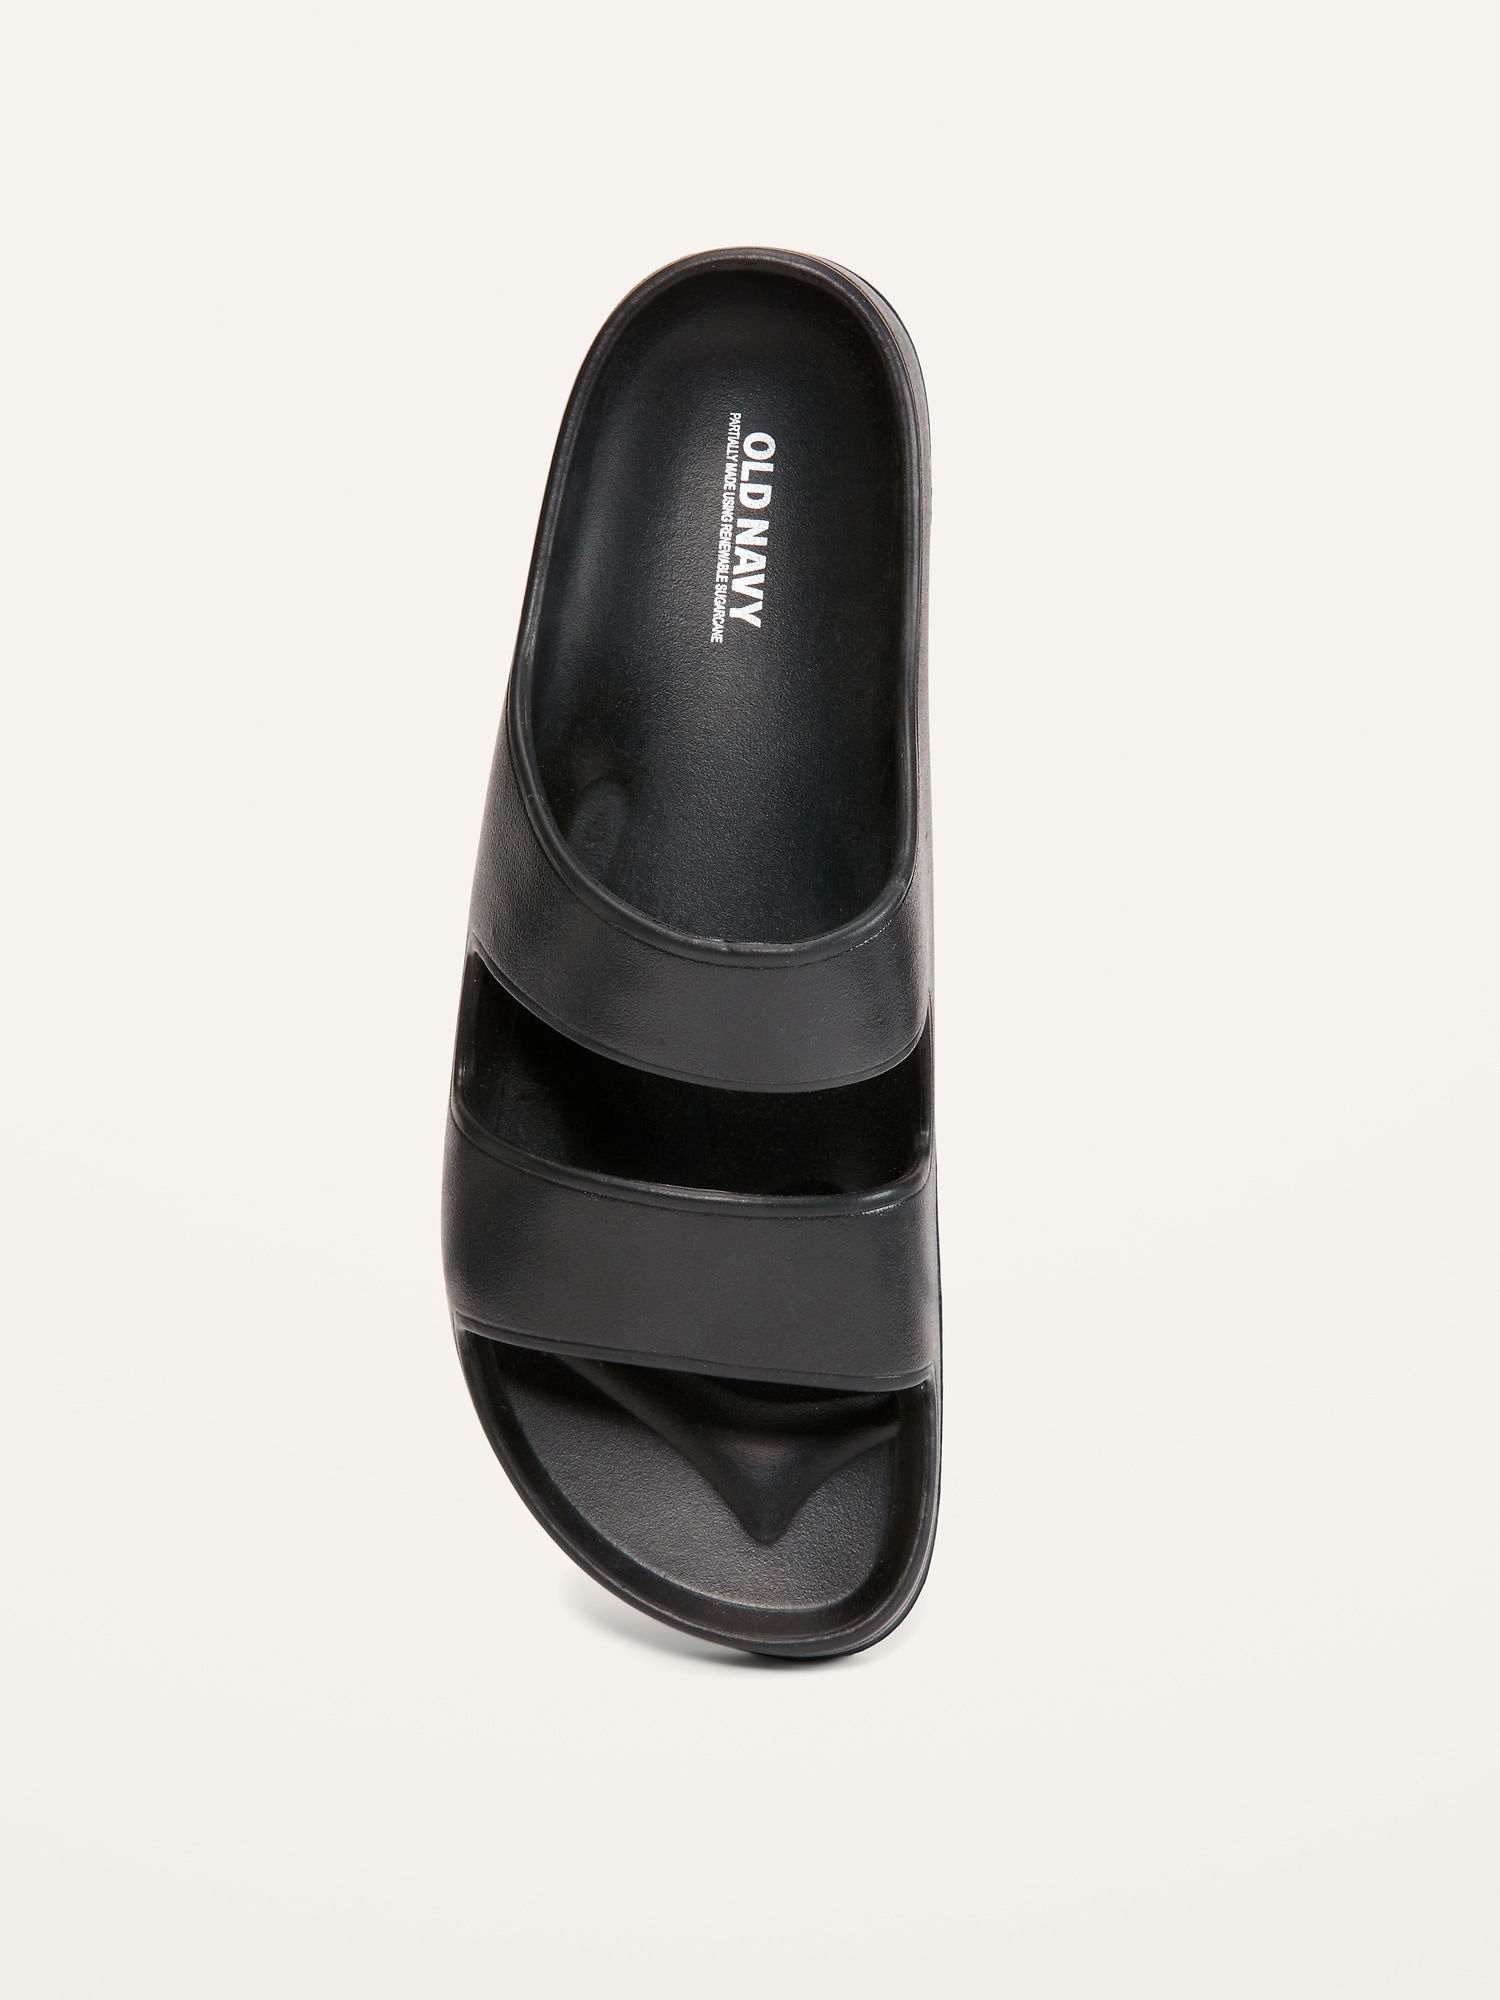 Old Navy Women's Double-Strap Slide Sandals